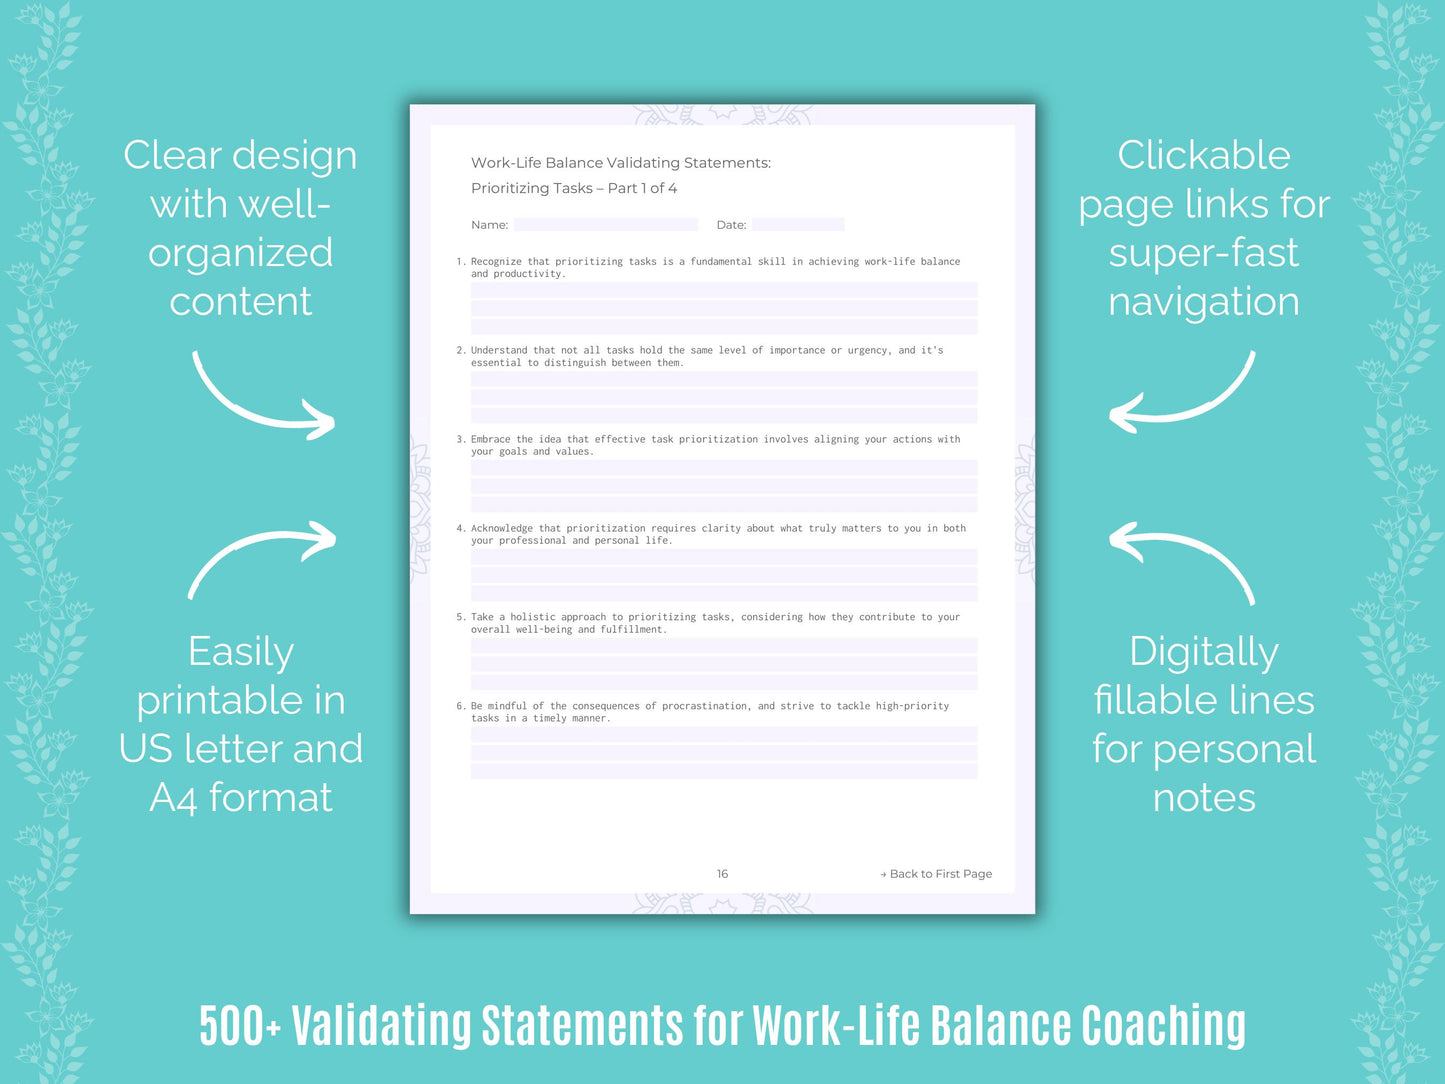 Work-Life Balance Validating Coaching Statements Workbook